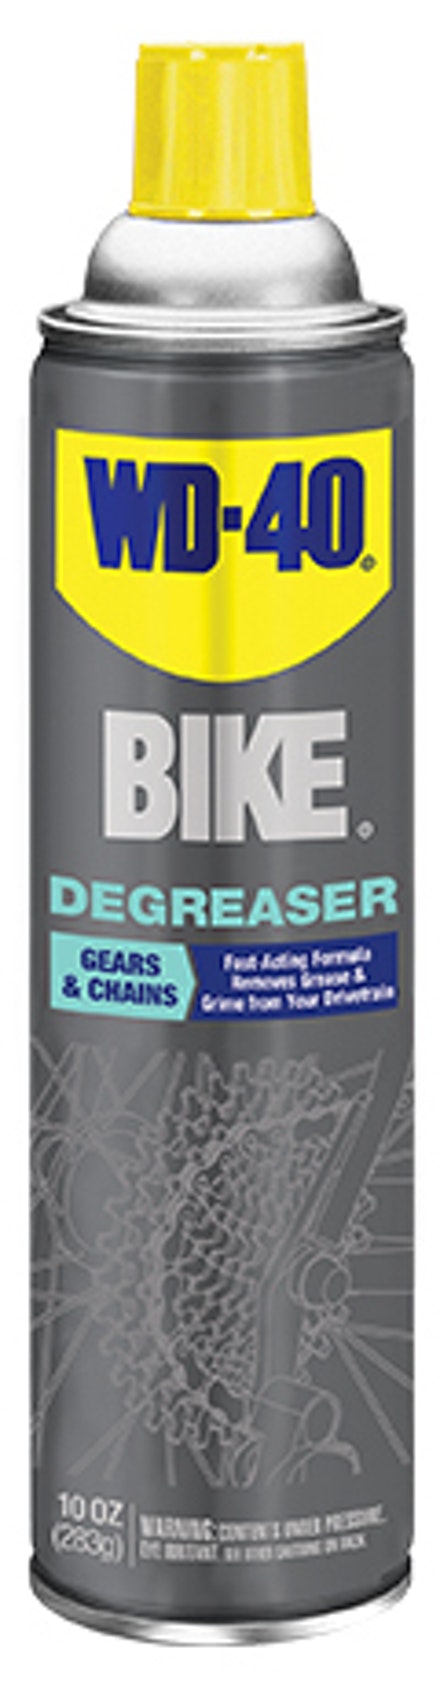 WD-40 Bike Degreaser #390241, 10 oz - AutoCareParts.com